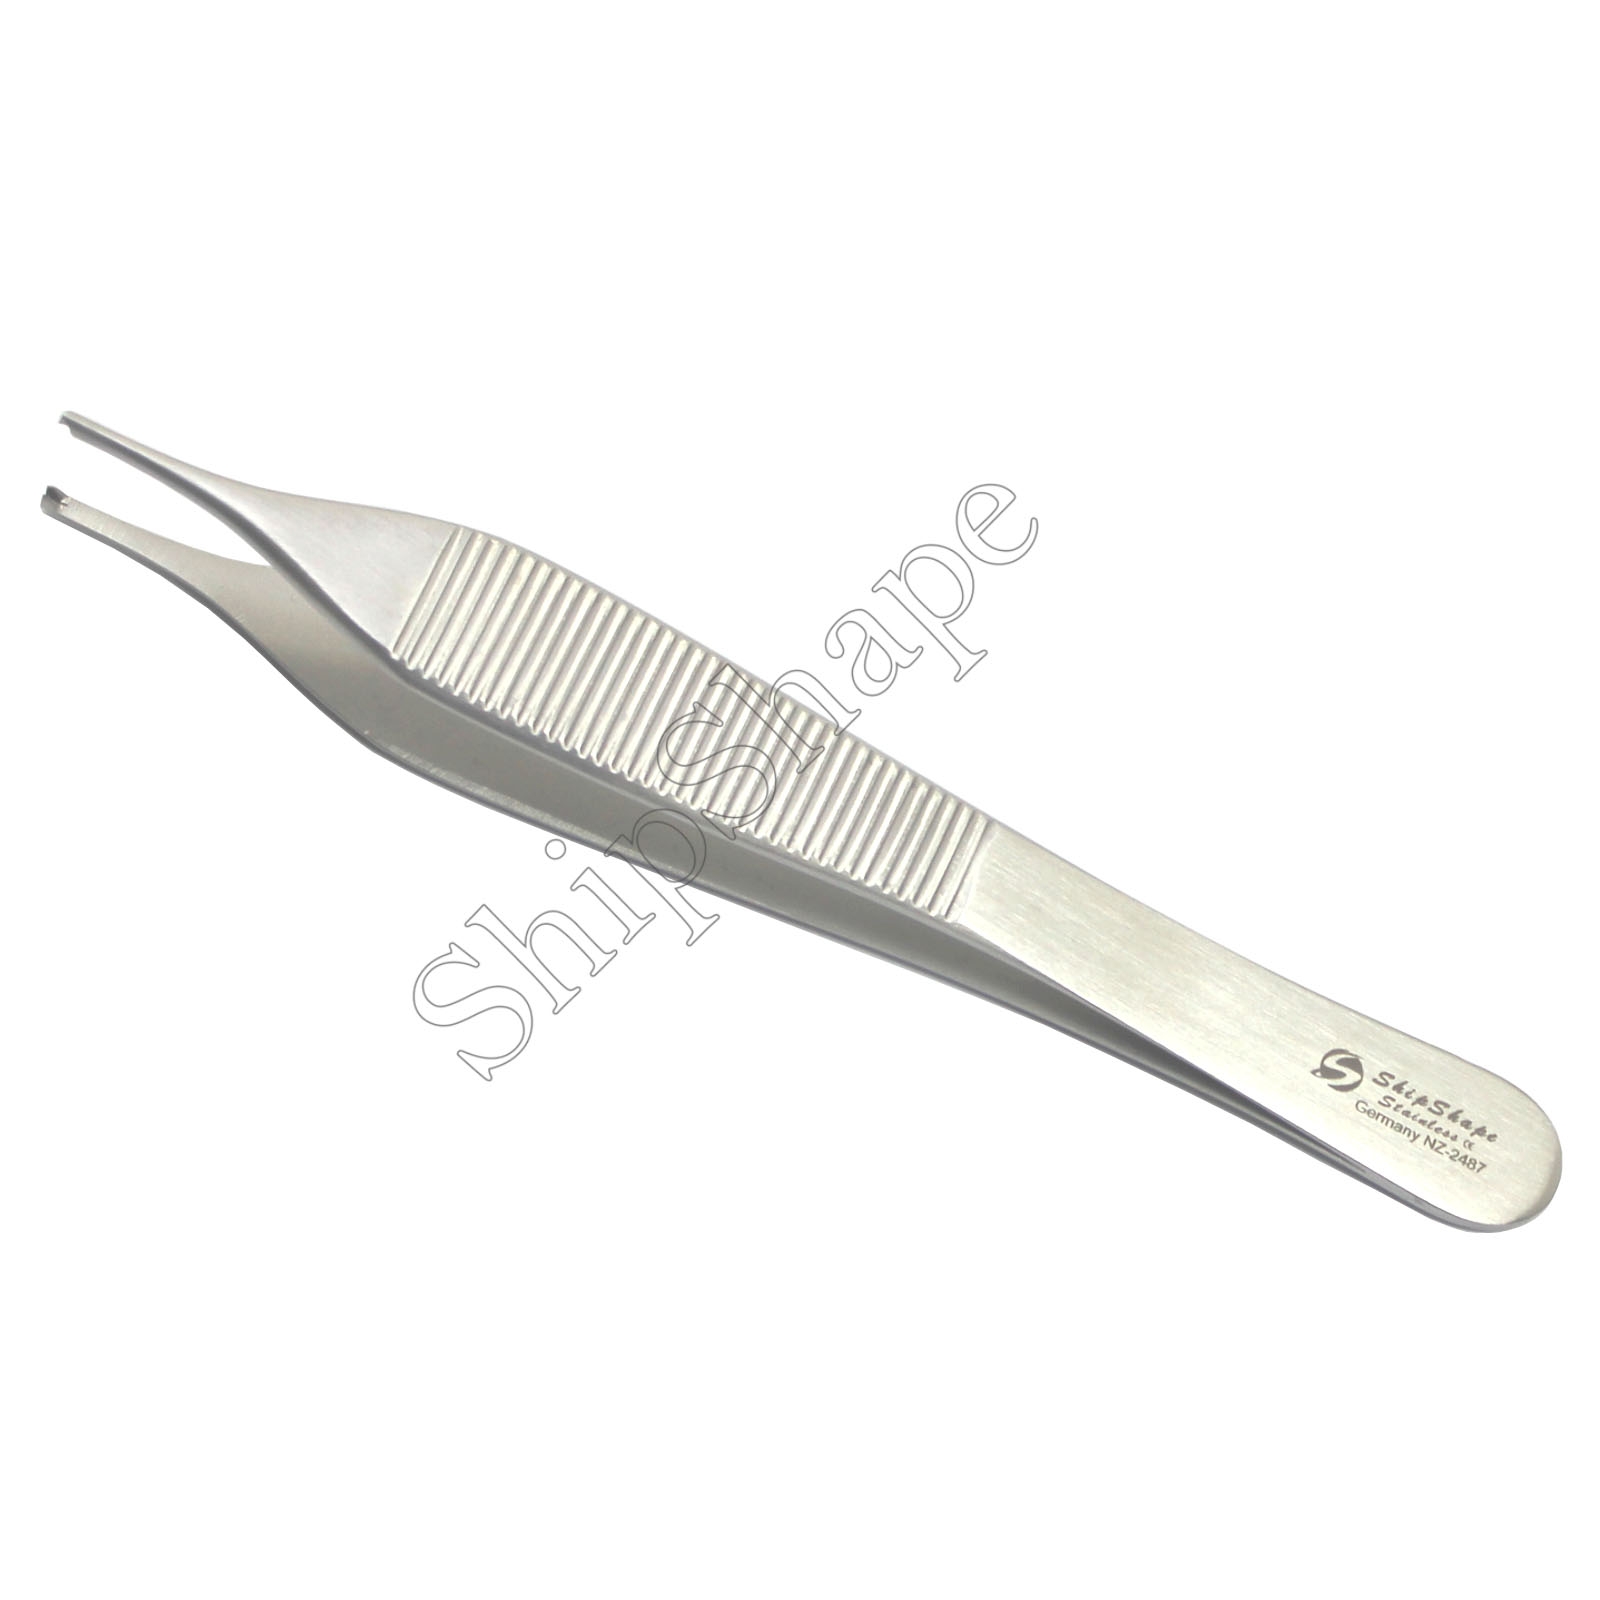 Adson Forceps, 12cm, Teeth 1X2, Dermatology Kocher, Tweezers Dental Instruments-563